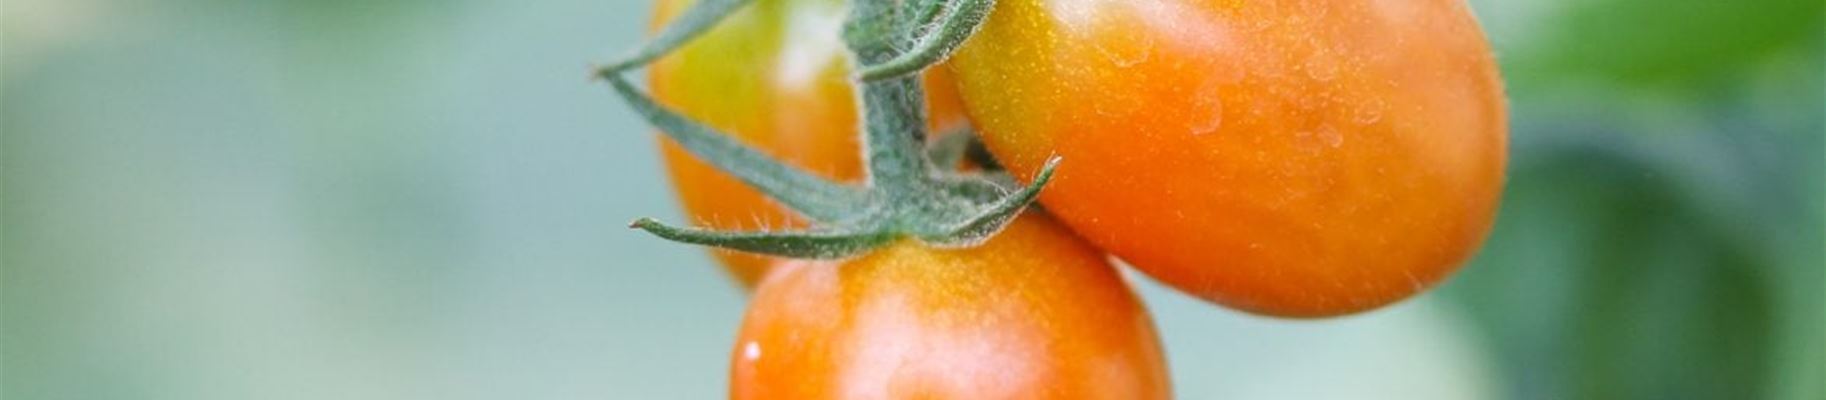 Tomatenchallenge-beitragsbild-1170x780.jpg